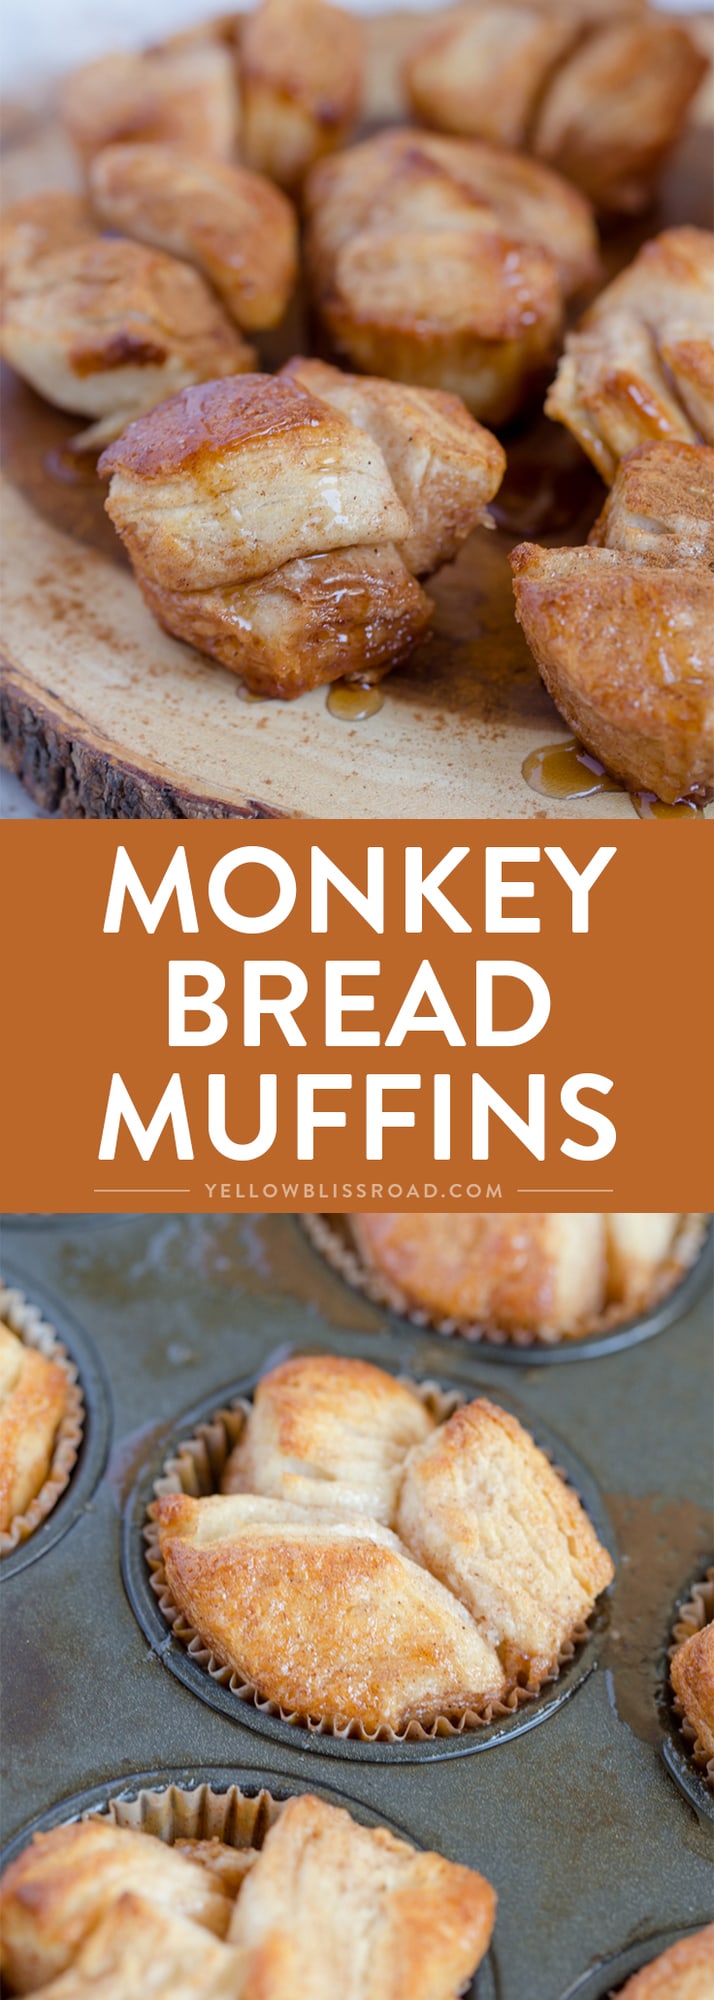 Social media image of Monkey Bread Muffins